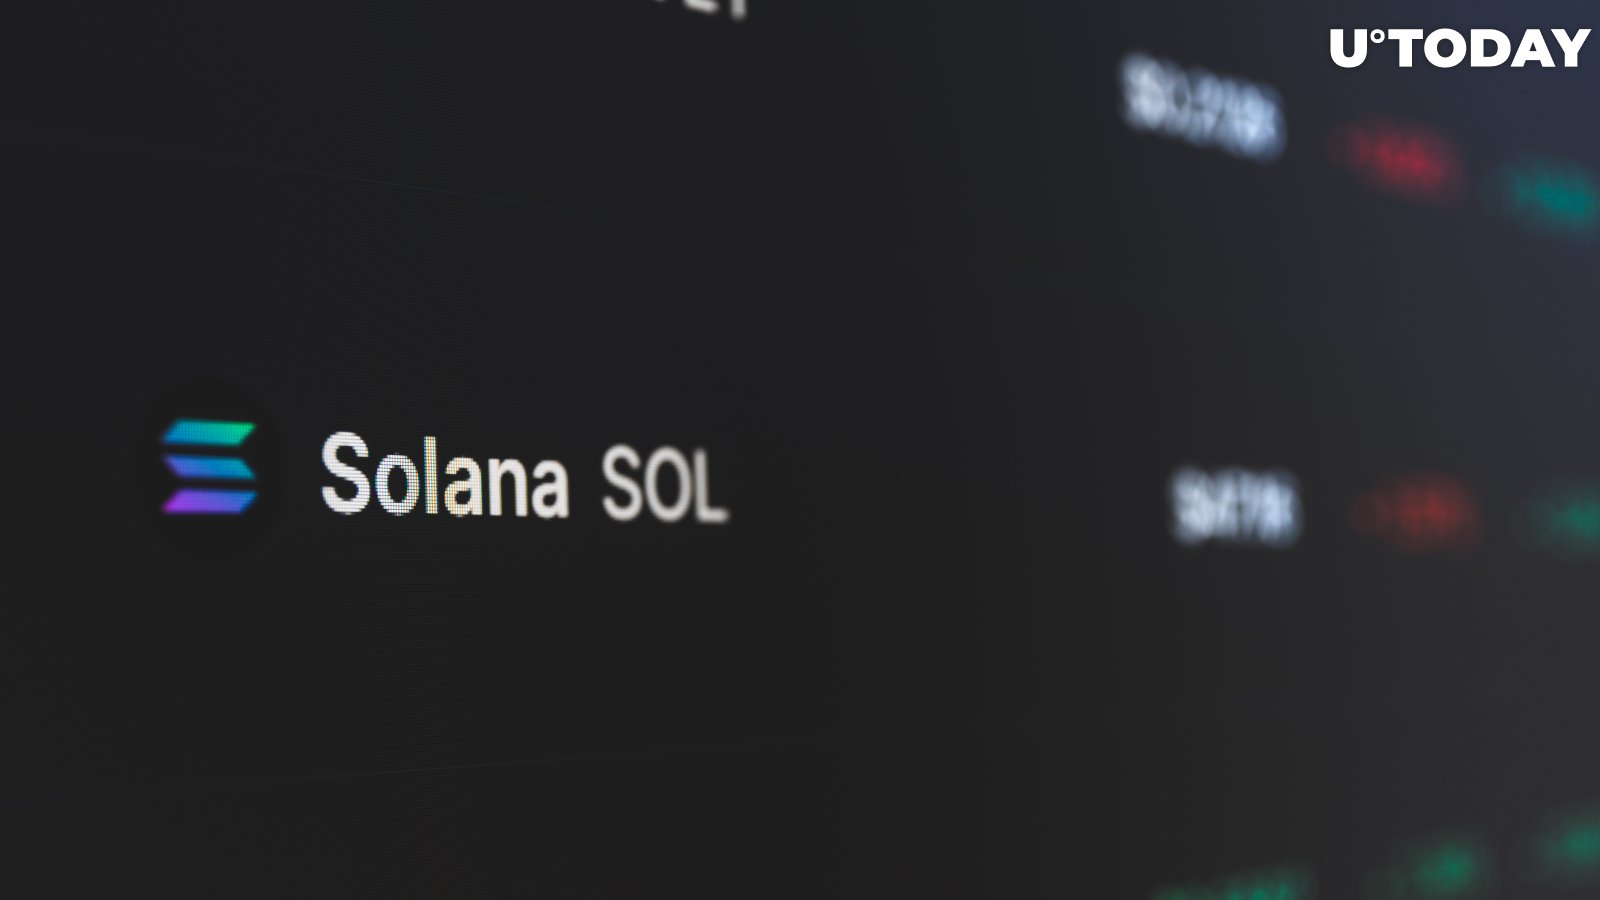 "Ethereum Killer" Solana Secures $314 Million in New Funding